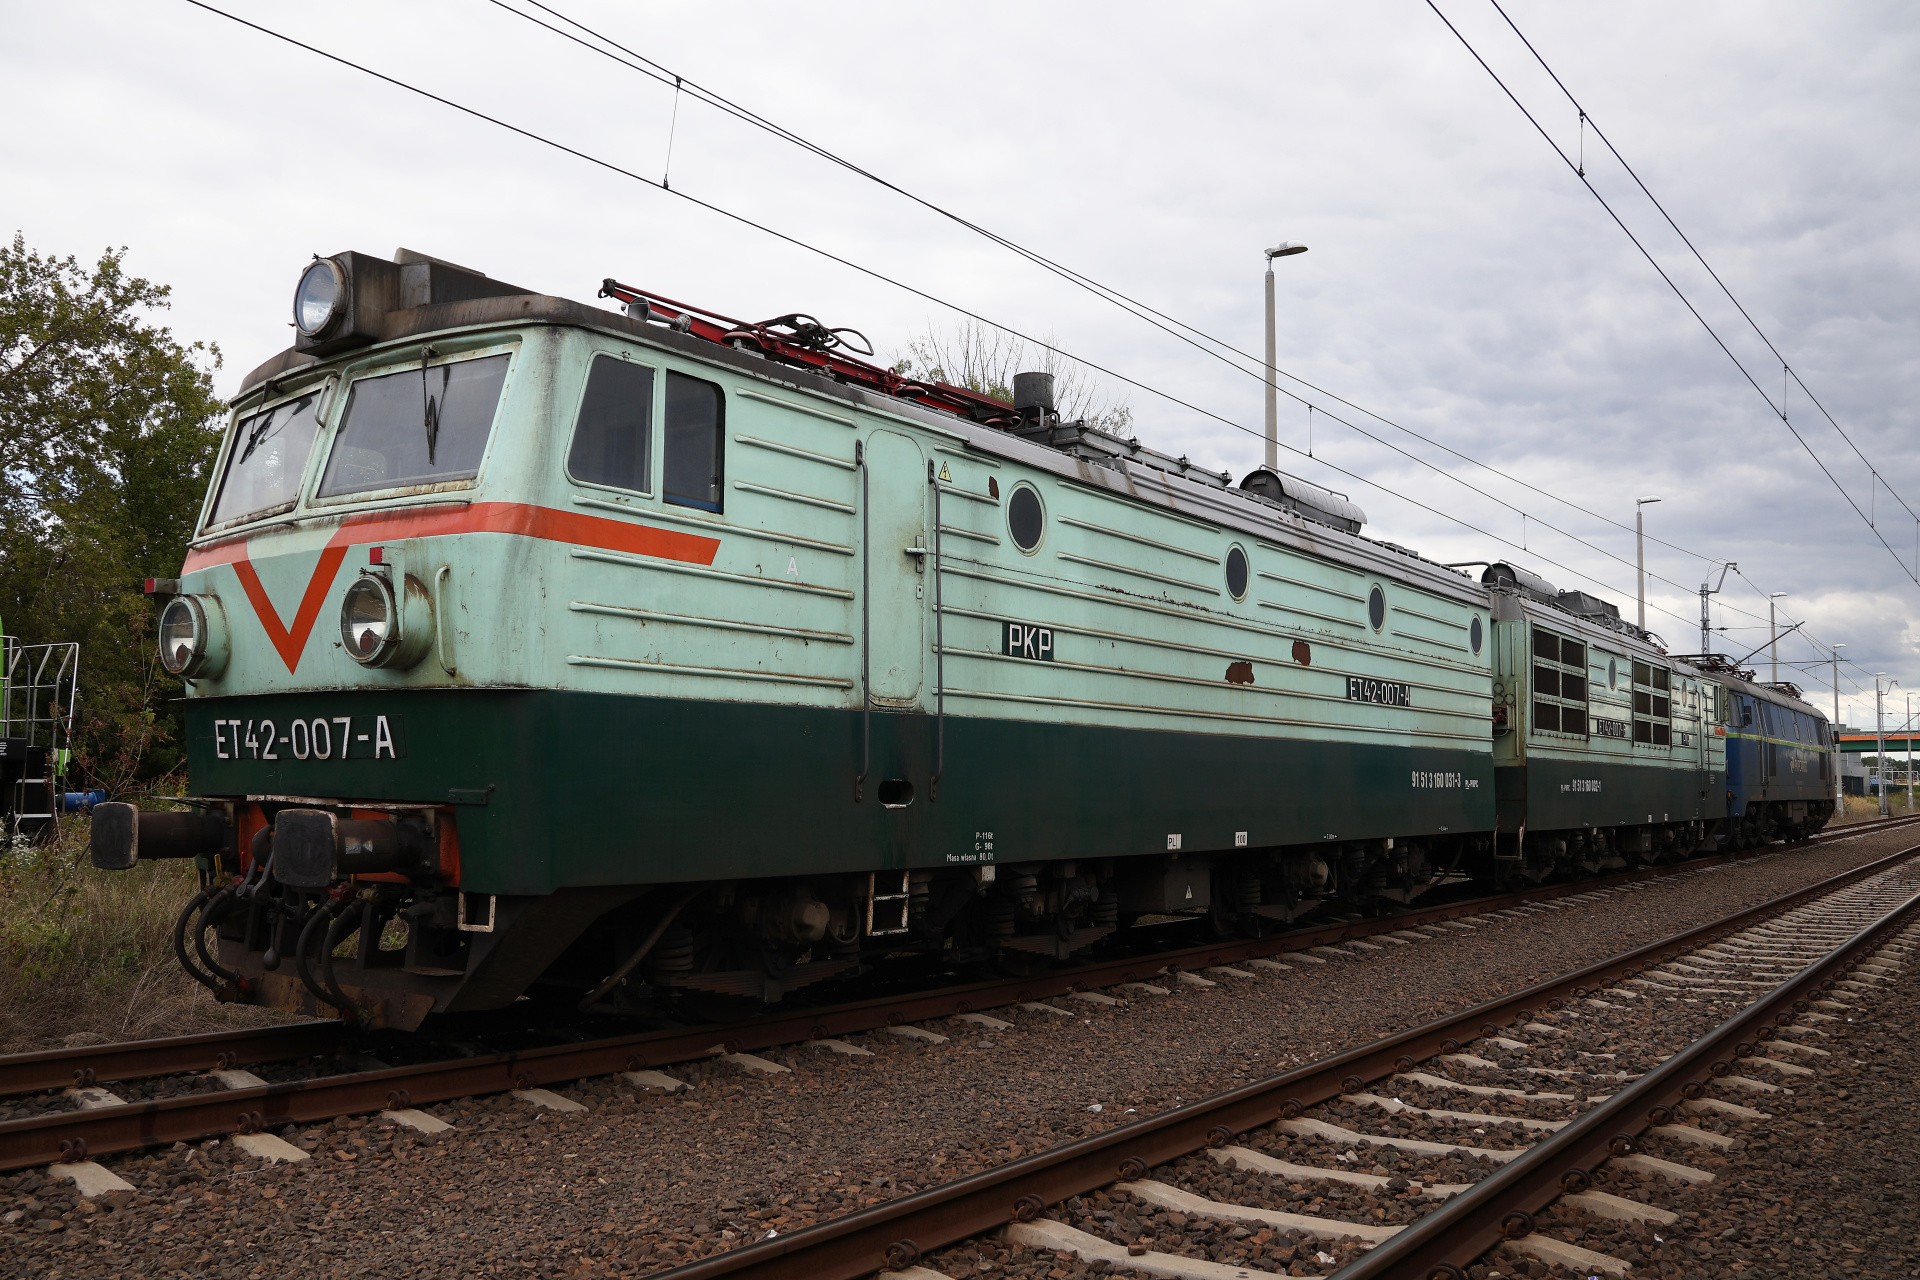 НЭВЗ ET42-007 (Vehicles » Trains and Locomotives)